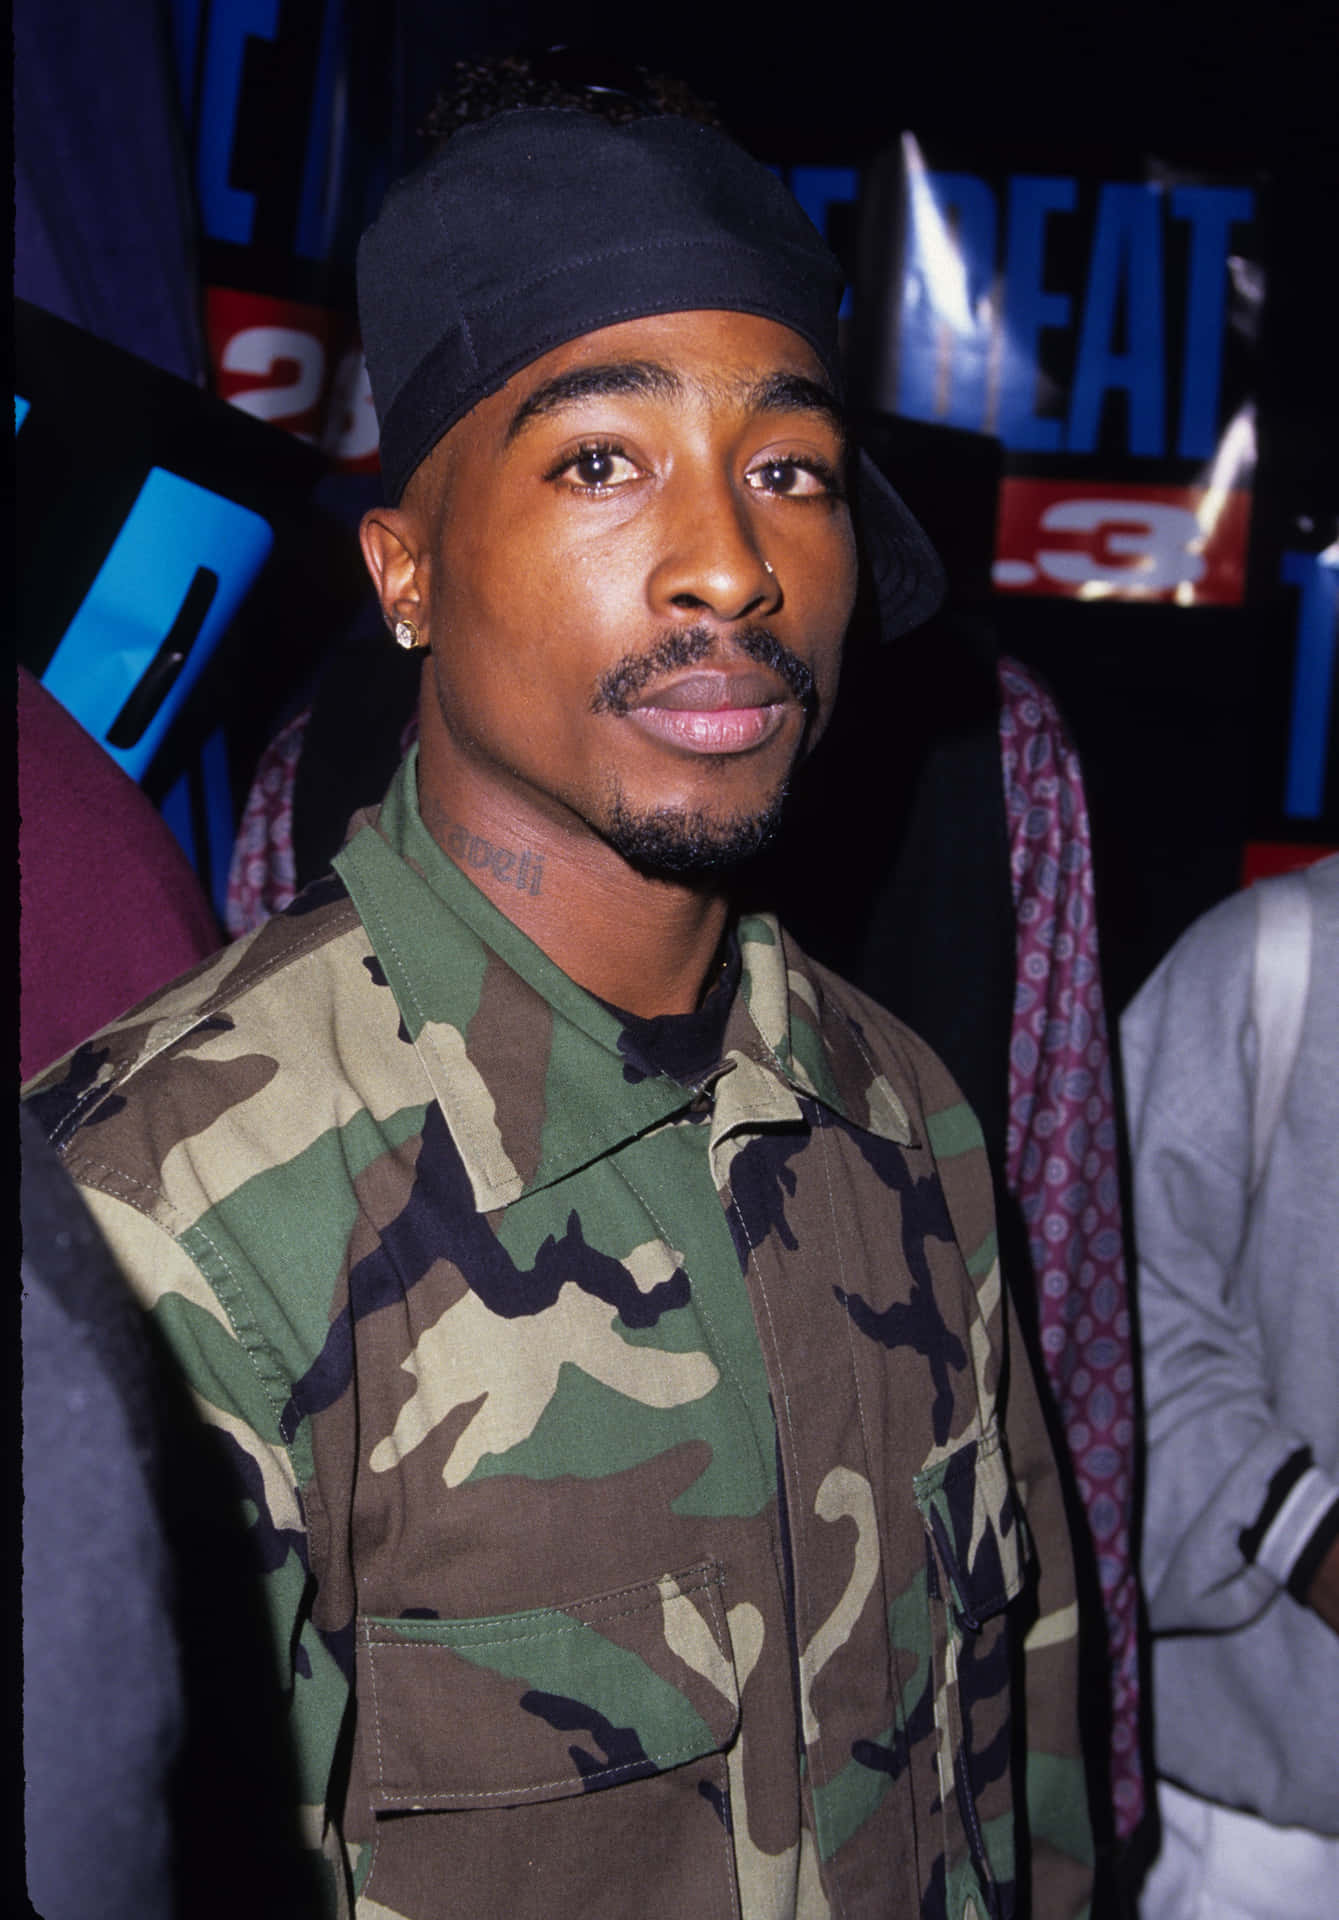 The legendary rap artist Tupac